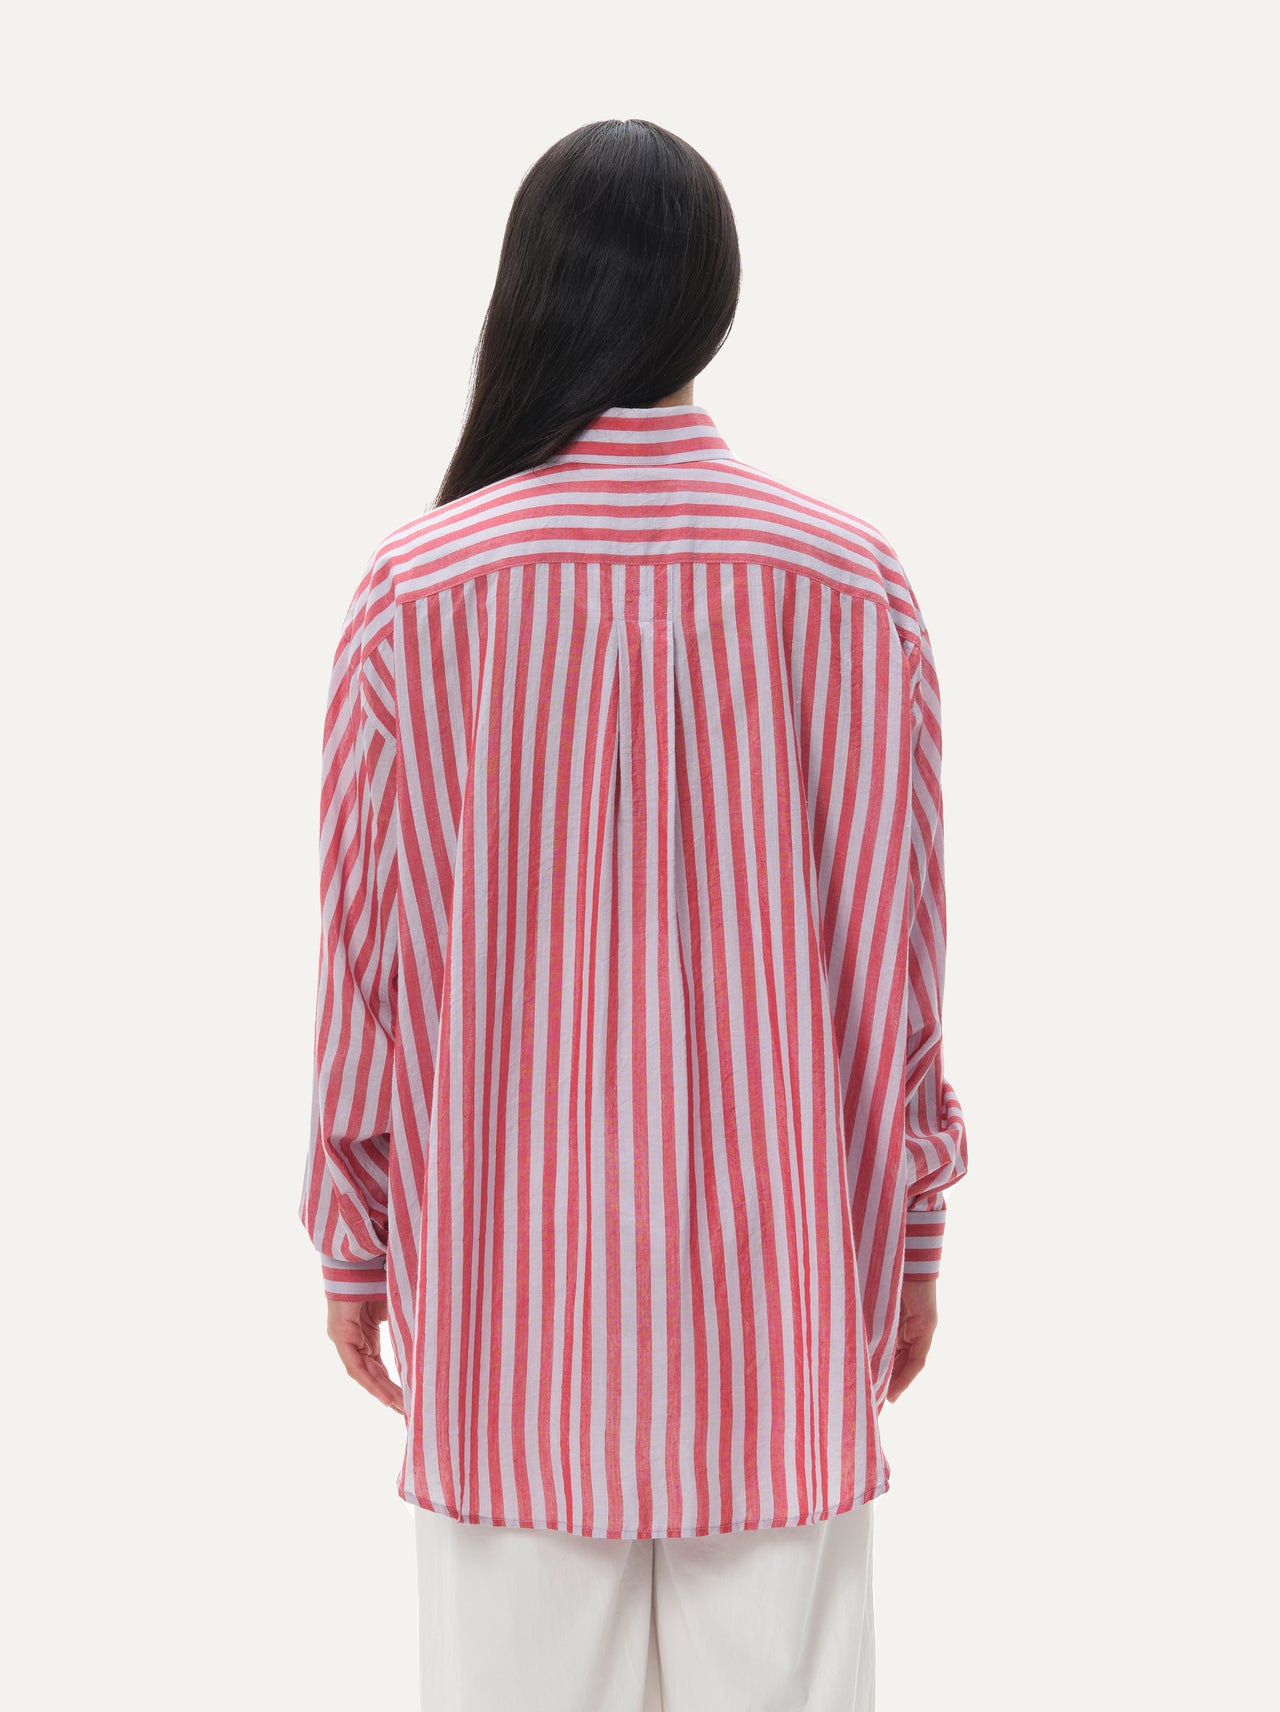 Boyfriend shirt - Temple stripes